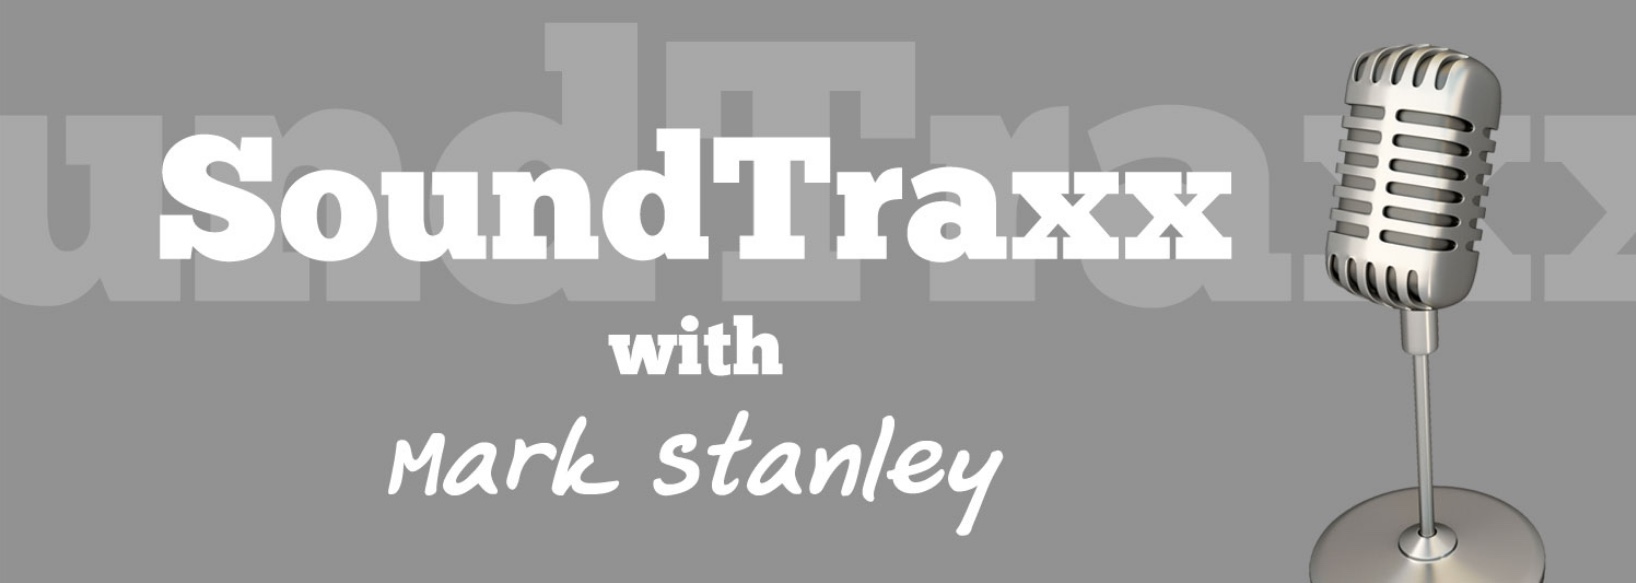 SoundTraxx Logo